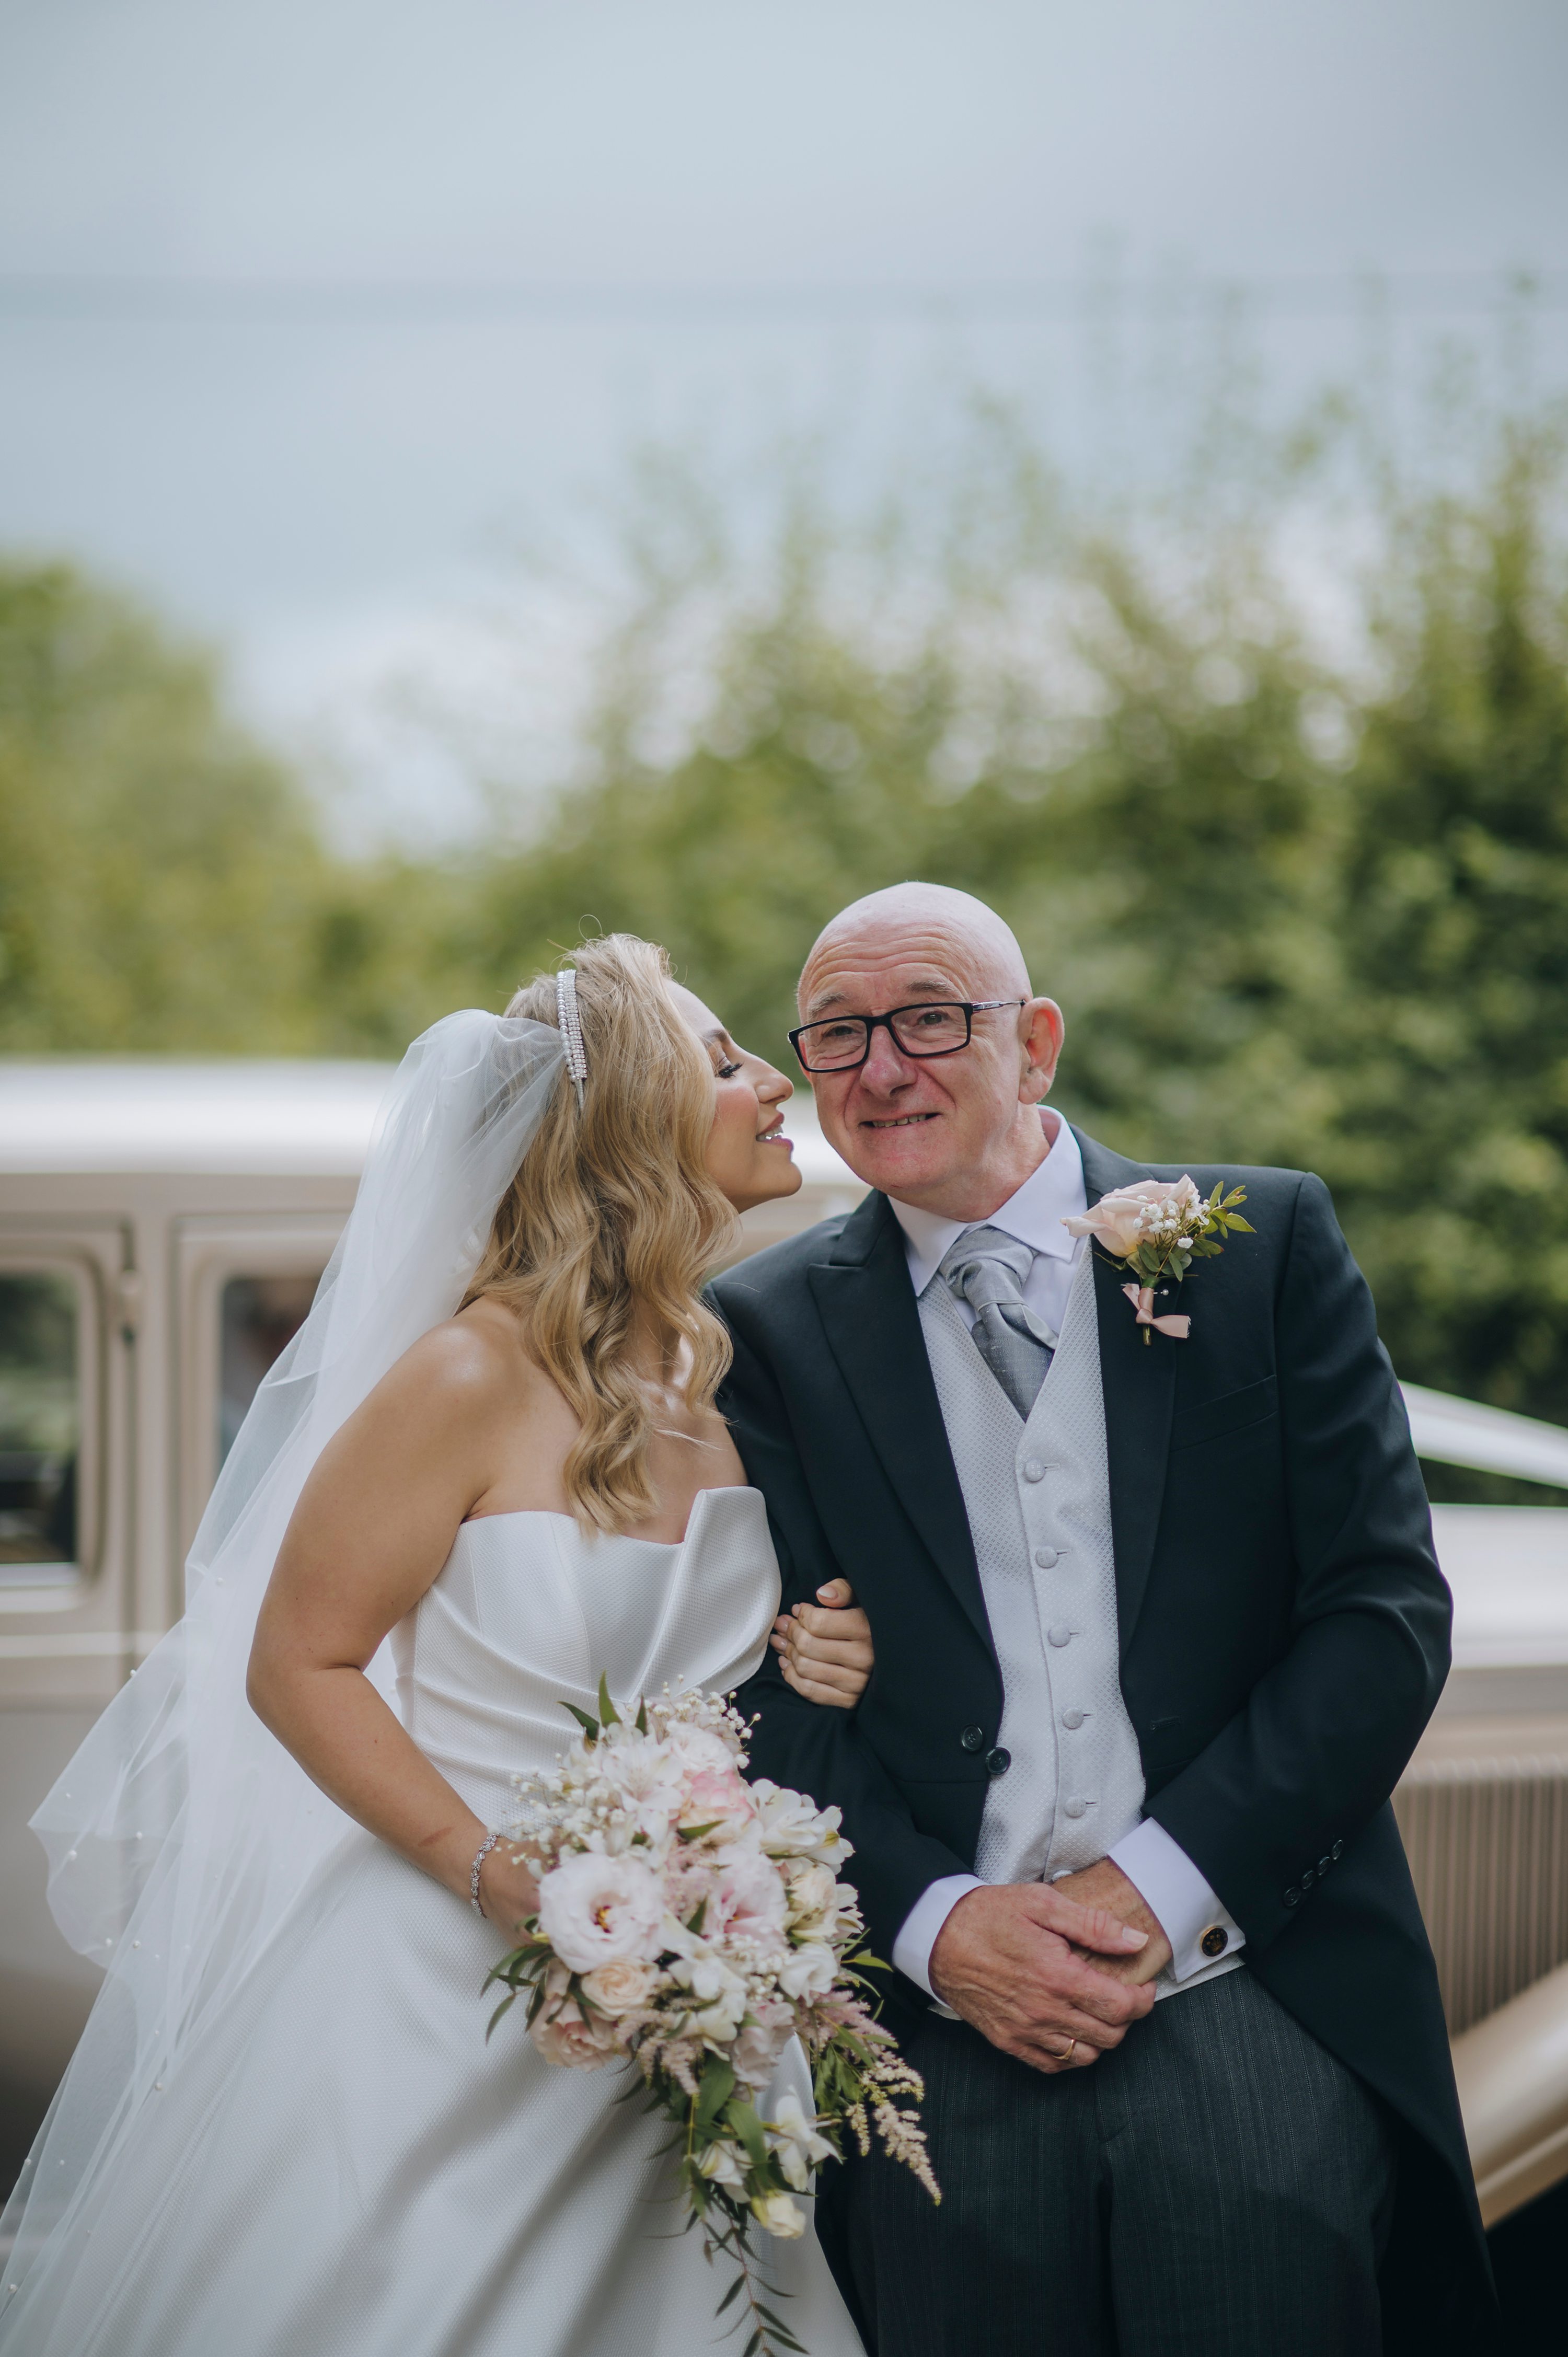 Bagden Hall Wedding Photos,Yorkshire wedding photographer,St Peter's Church, Tankersley wedding photo,bride kisses father